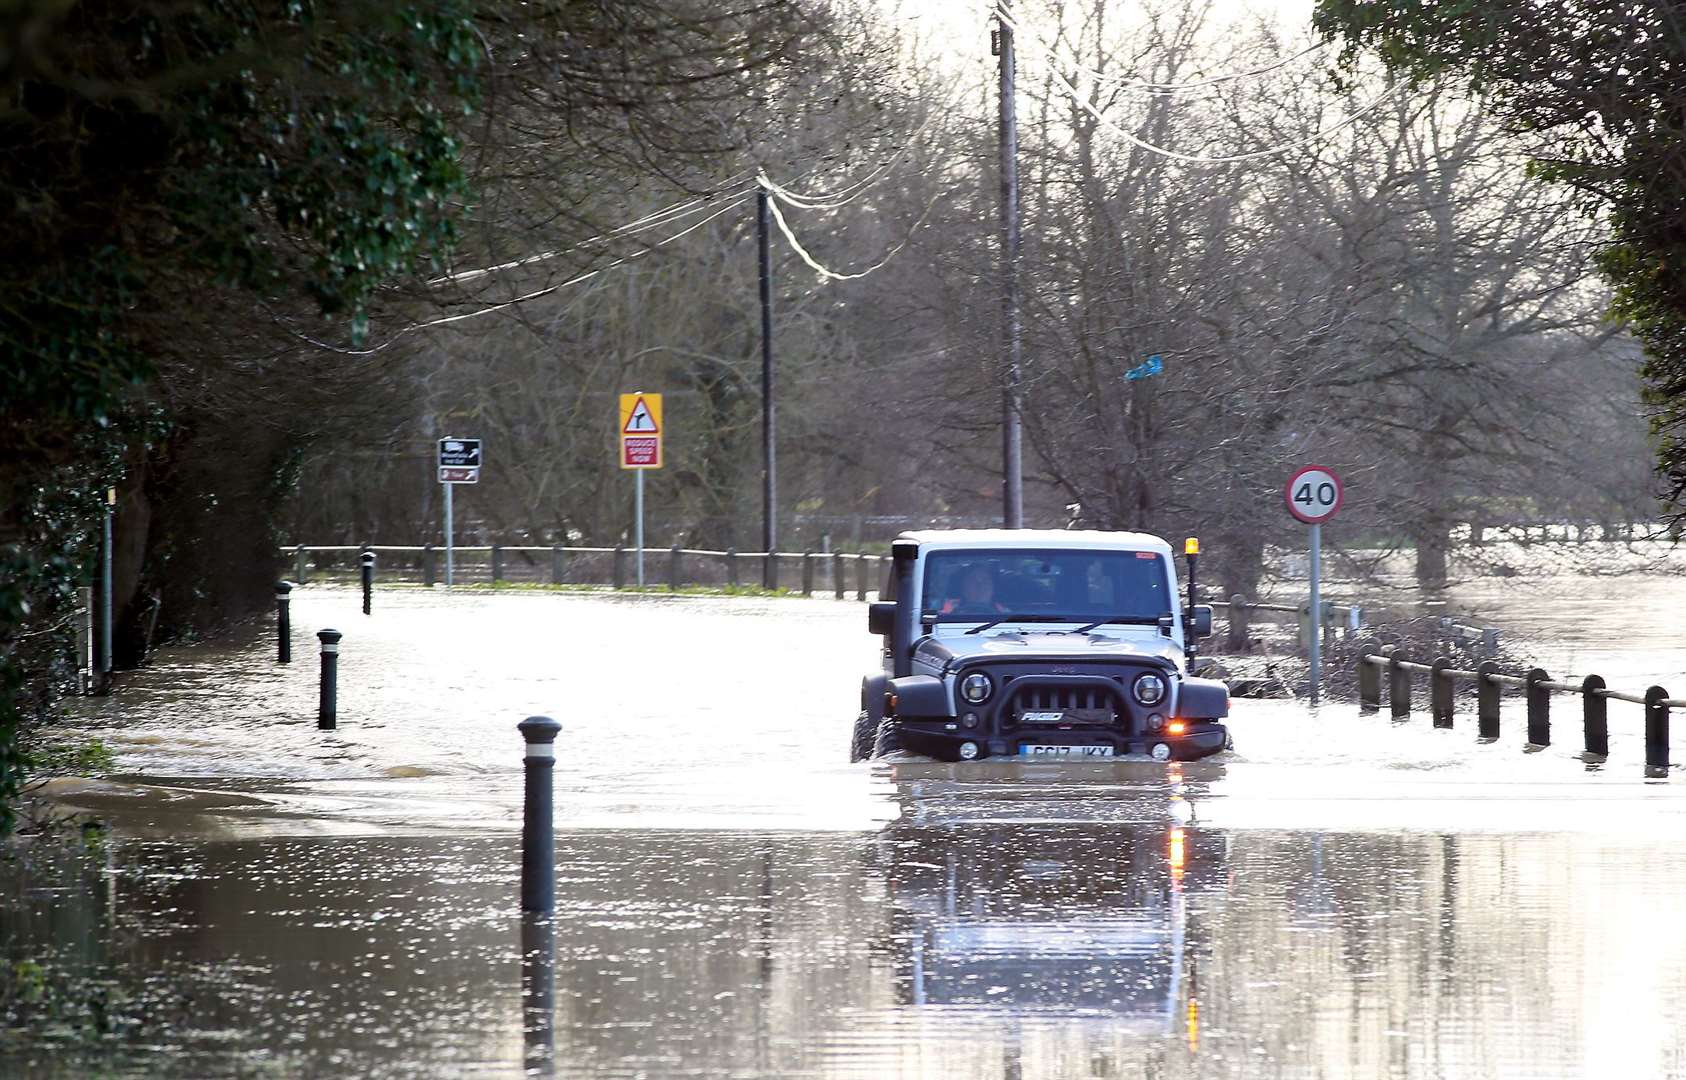 Flooding in Yalding